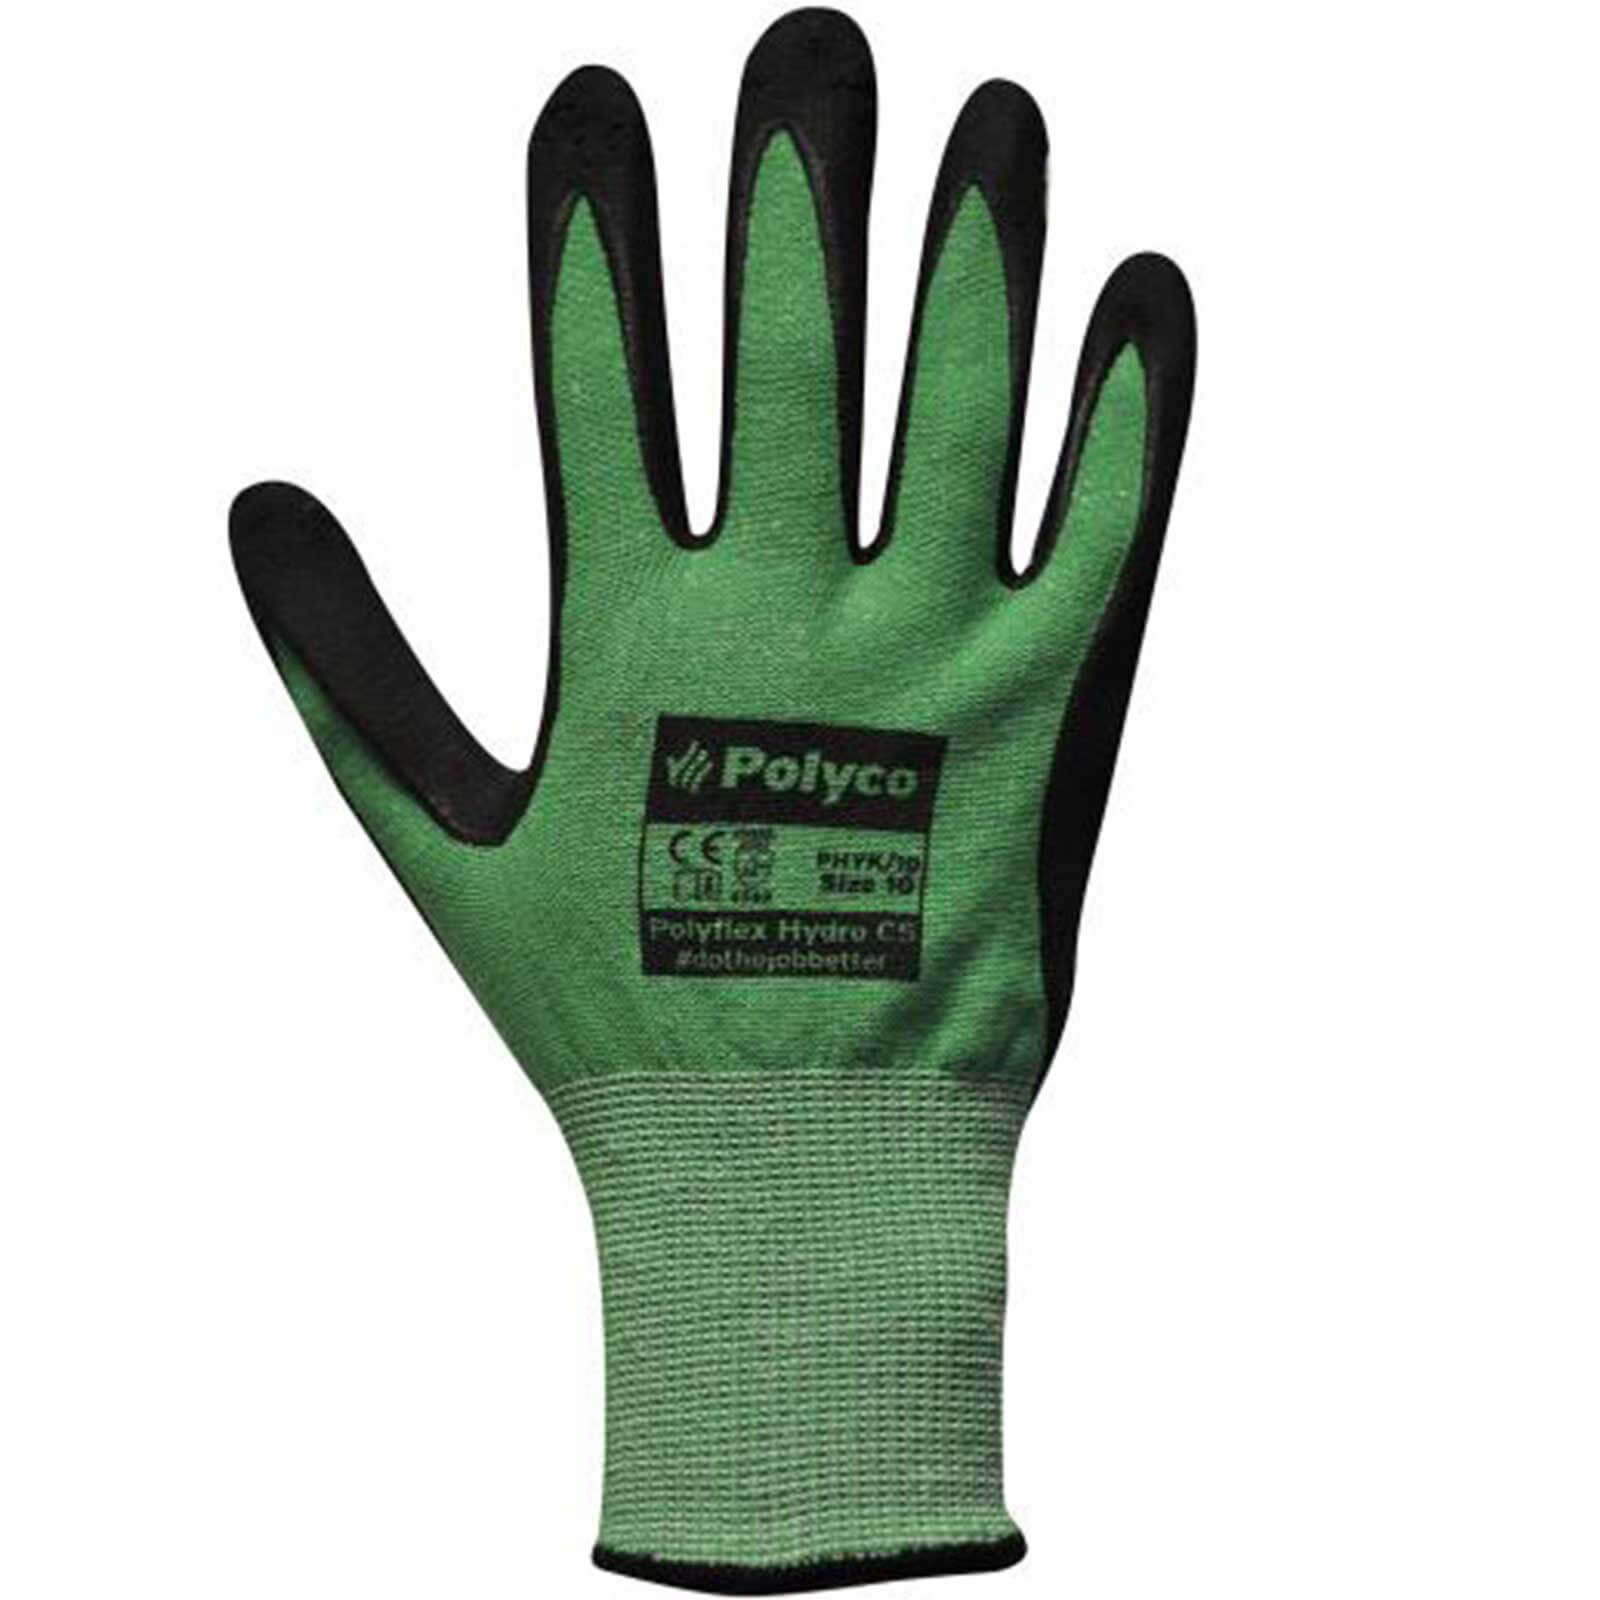 Image of Polyco Polyflex Hydro Safety C5 Gloves Green / Black L